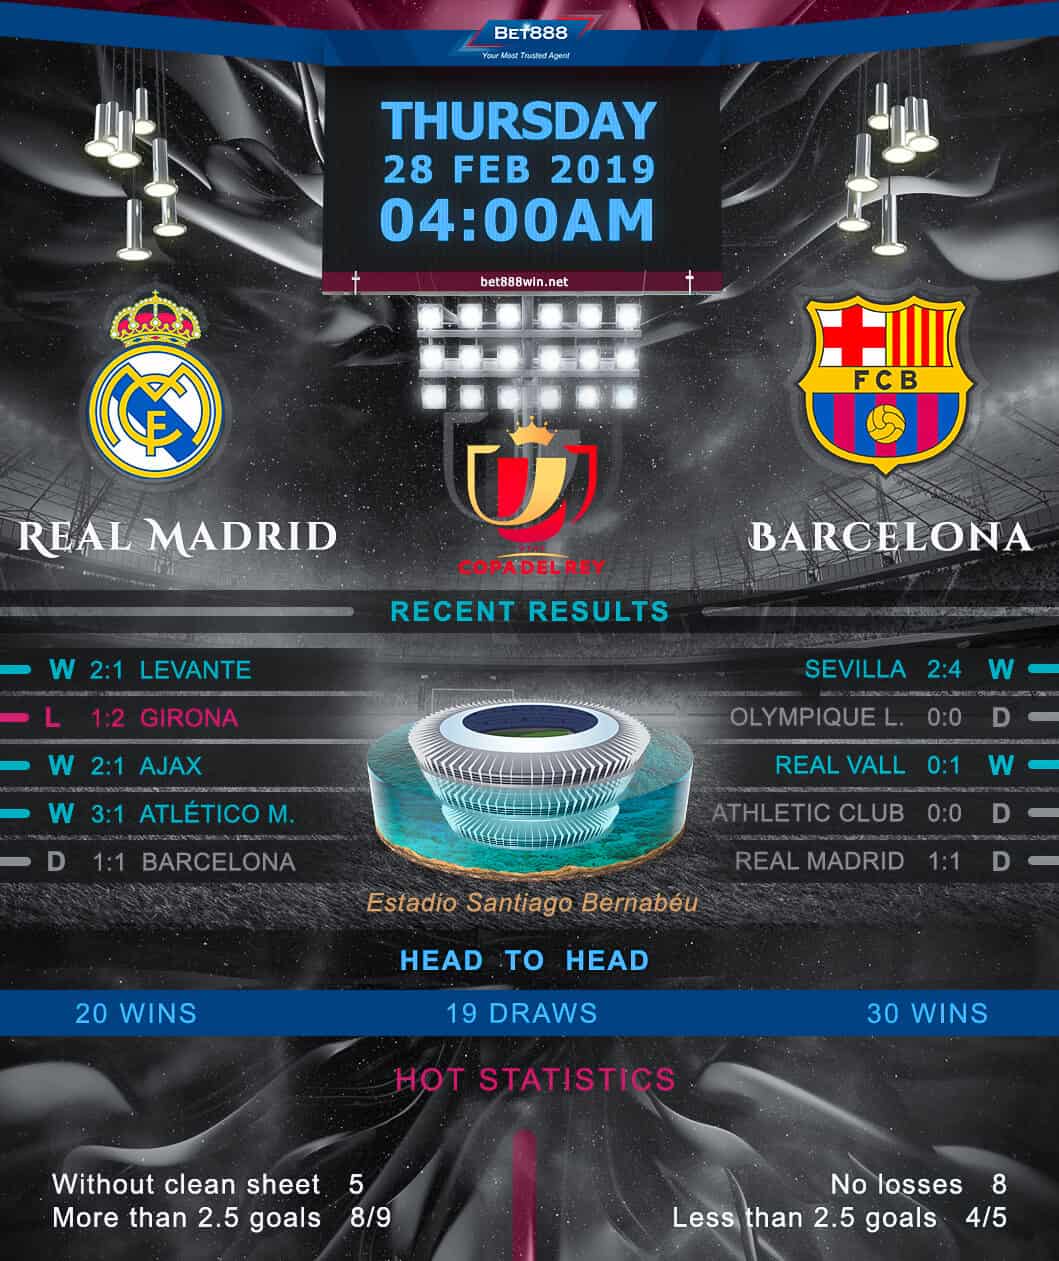 Real Madrid vs Barcelona 28/02/19